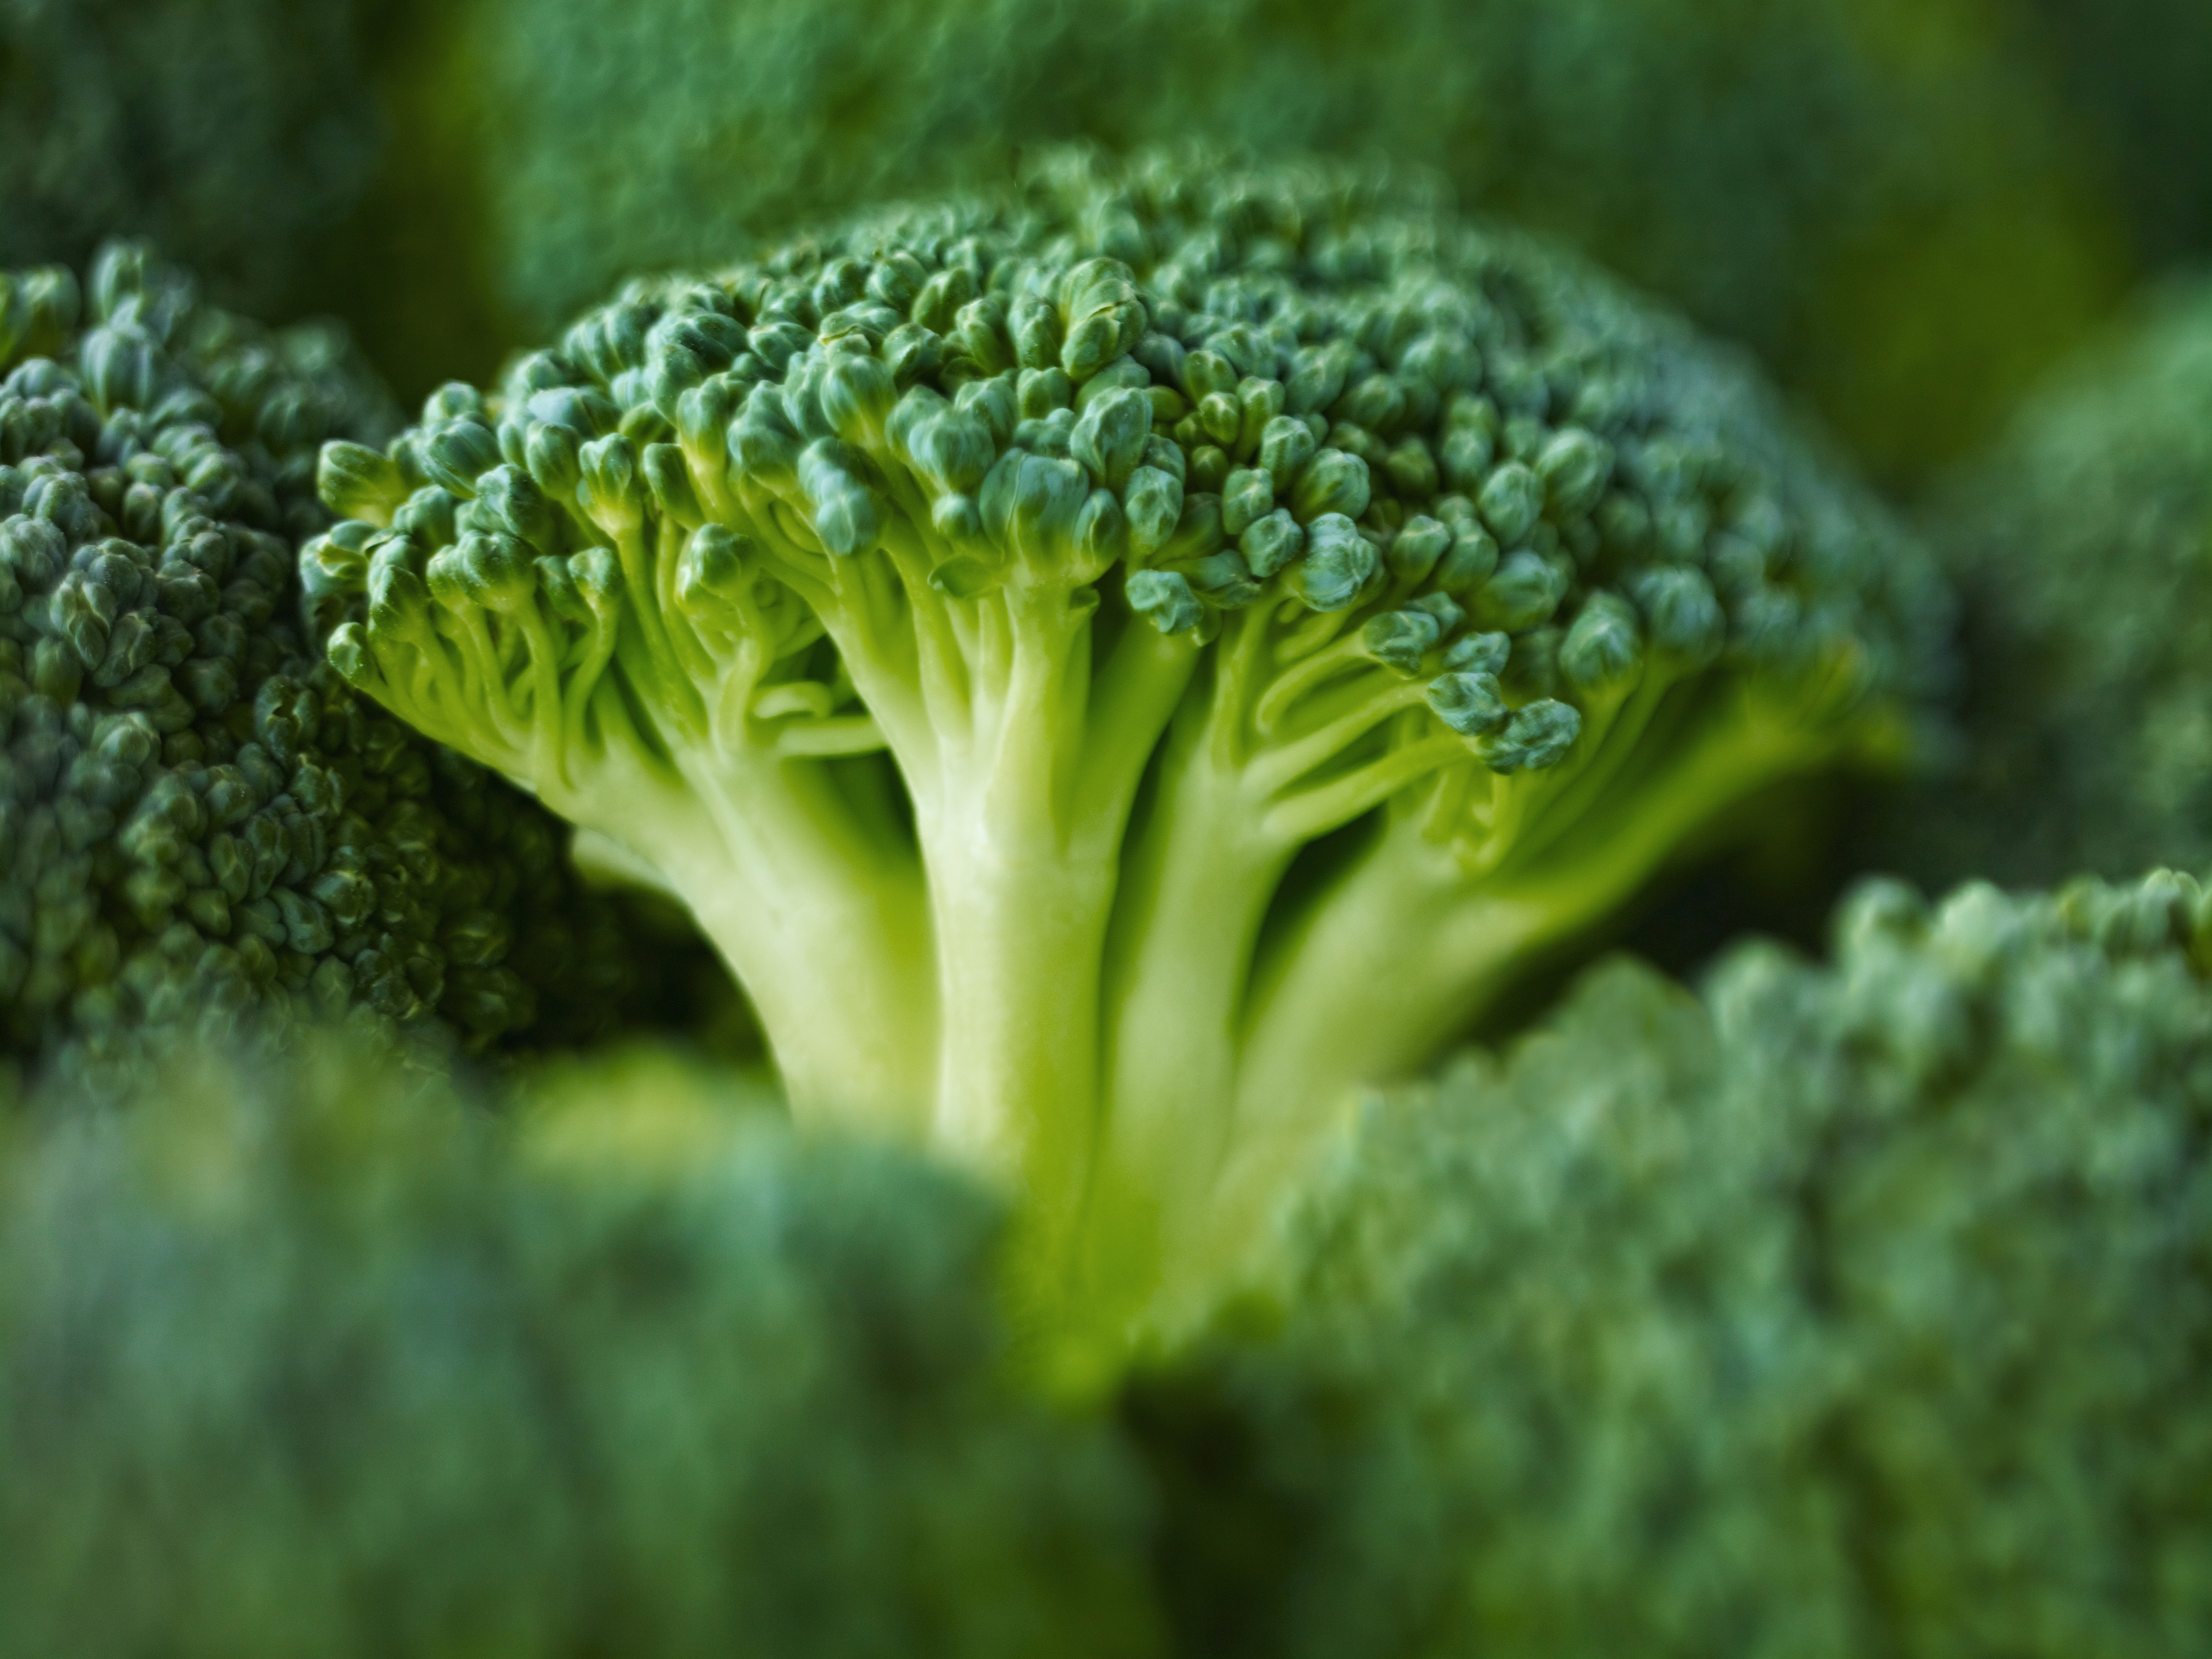  Broccoli Windows Backgrounds